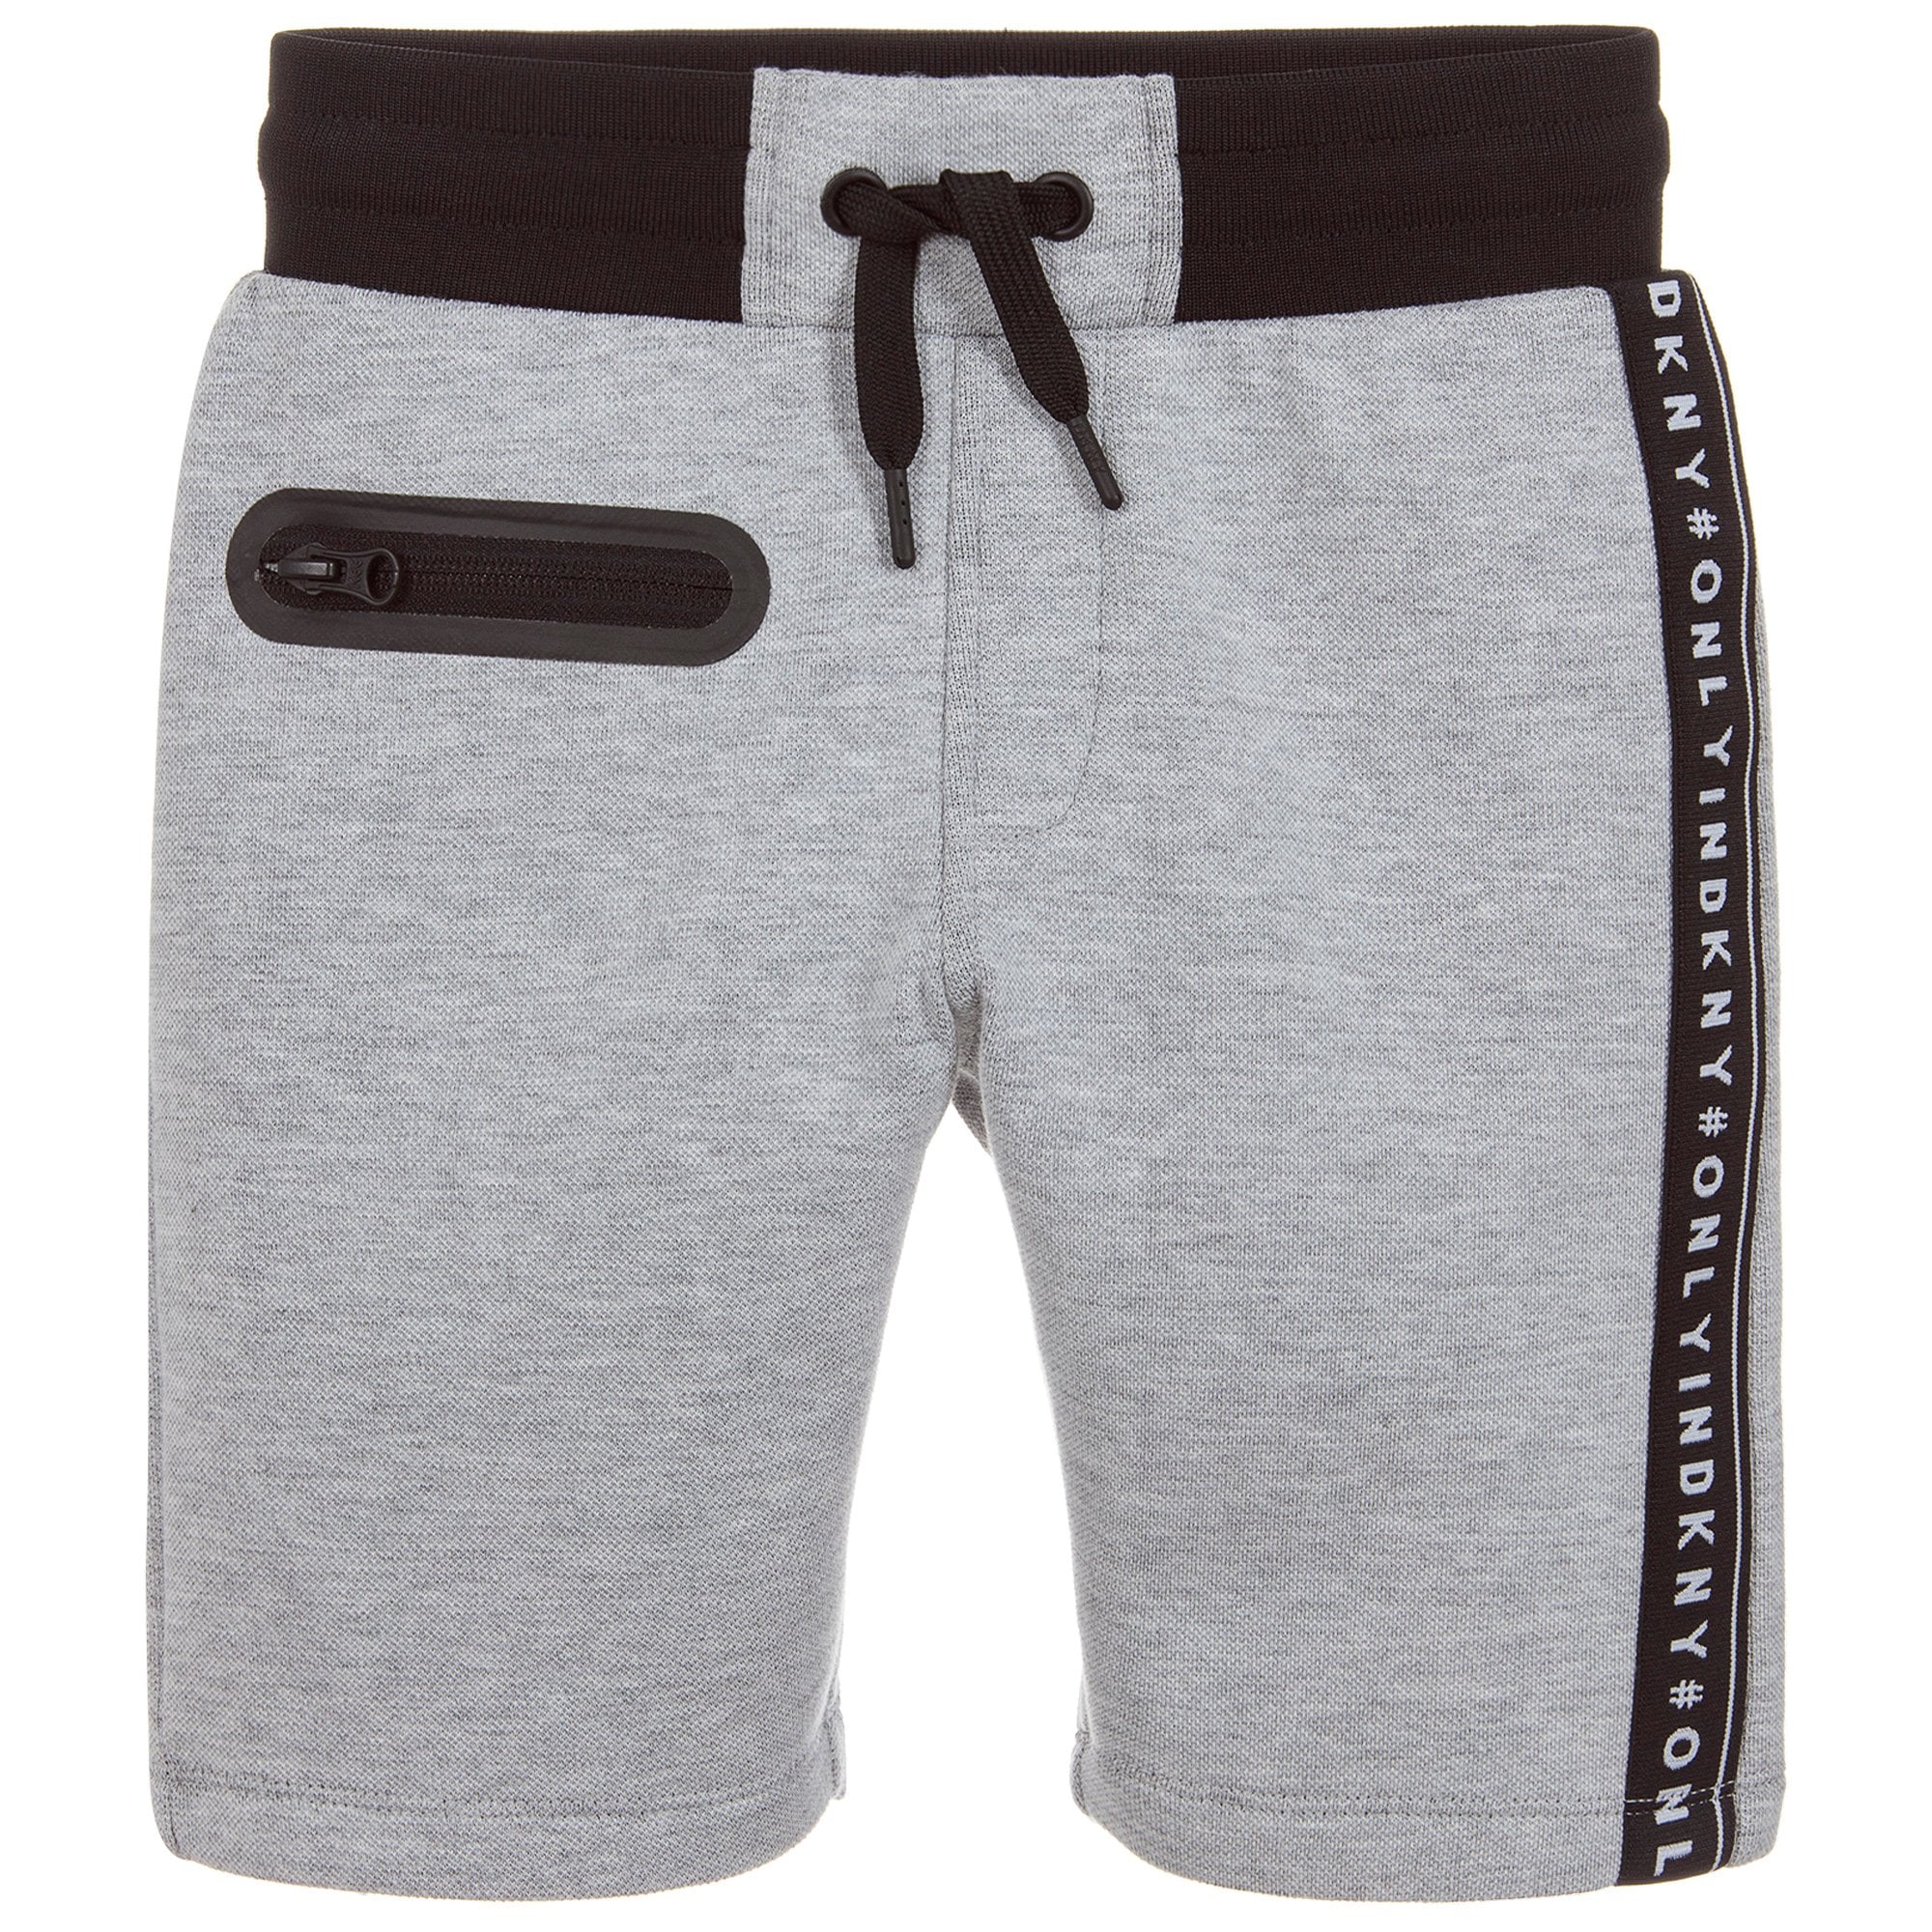 DKNY Boys Logo Shorts Cotton Grey